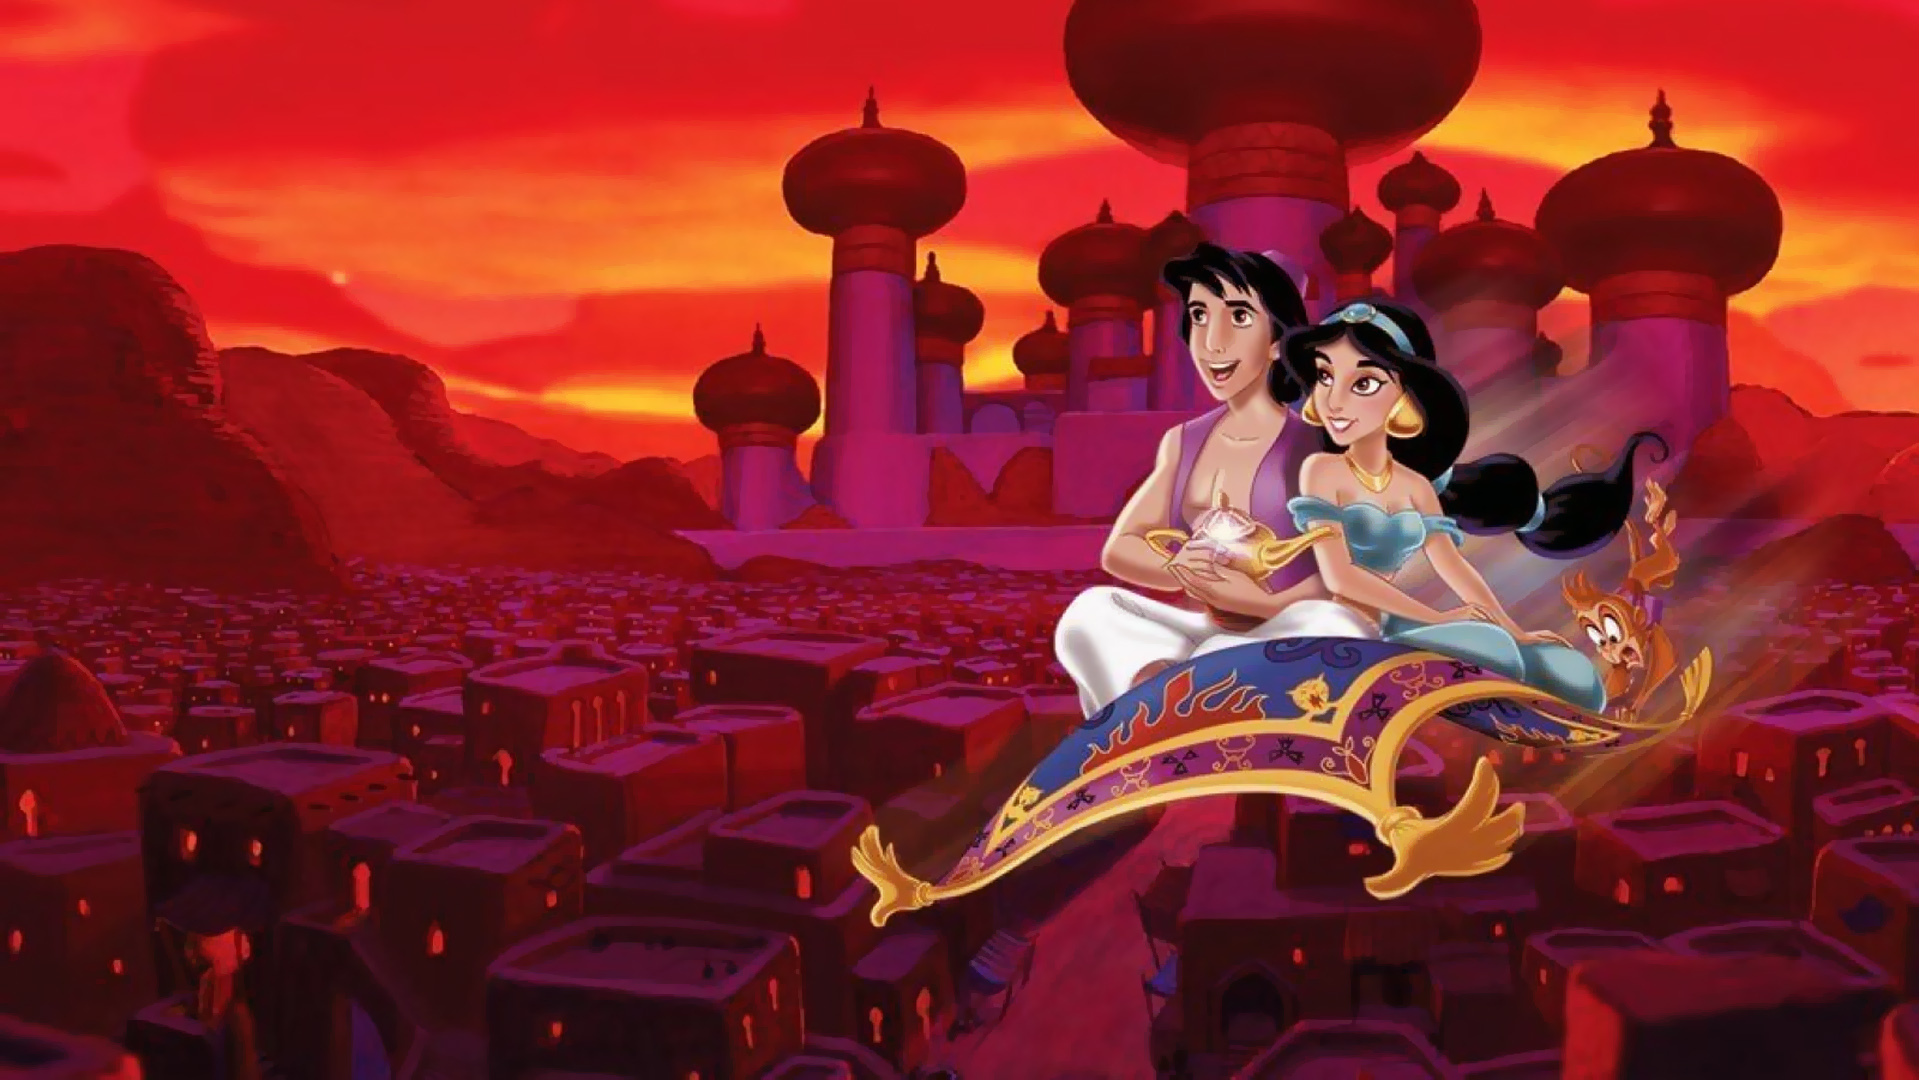 Aladdin - Movies that make you smile